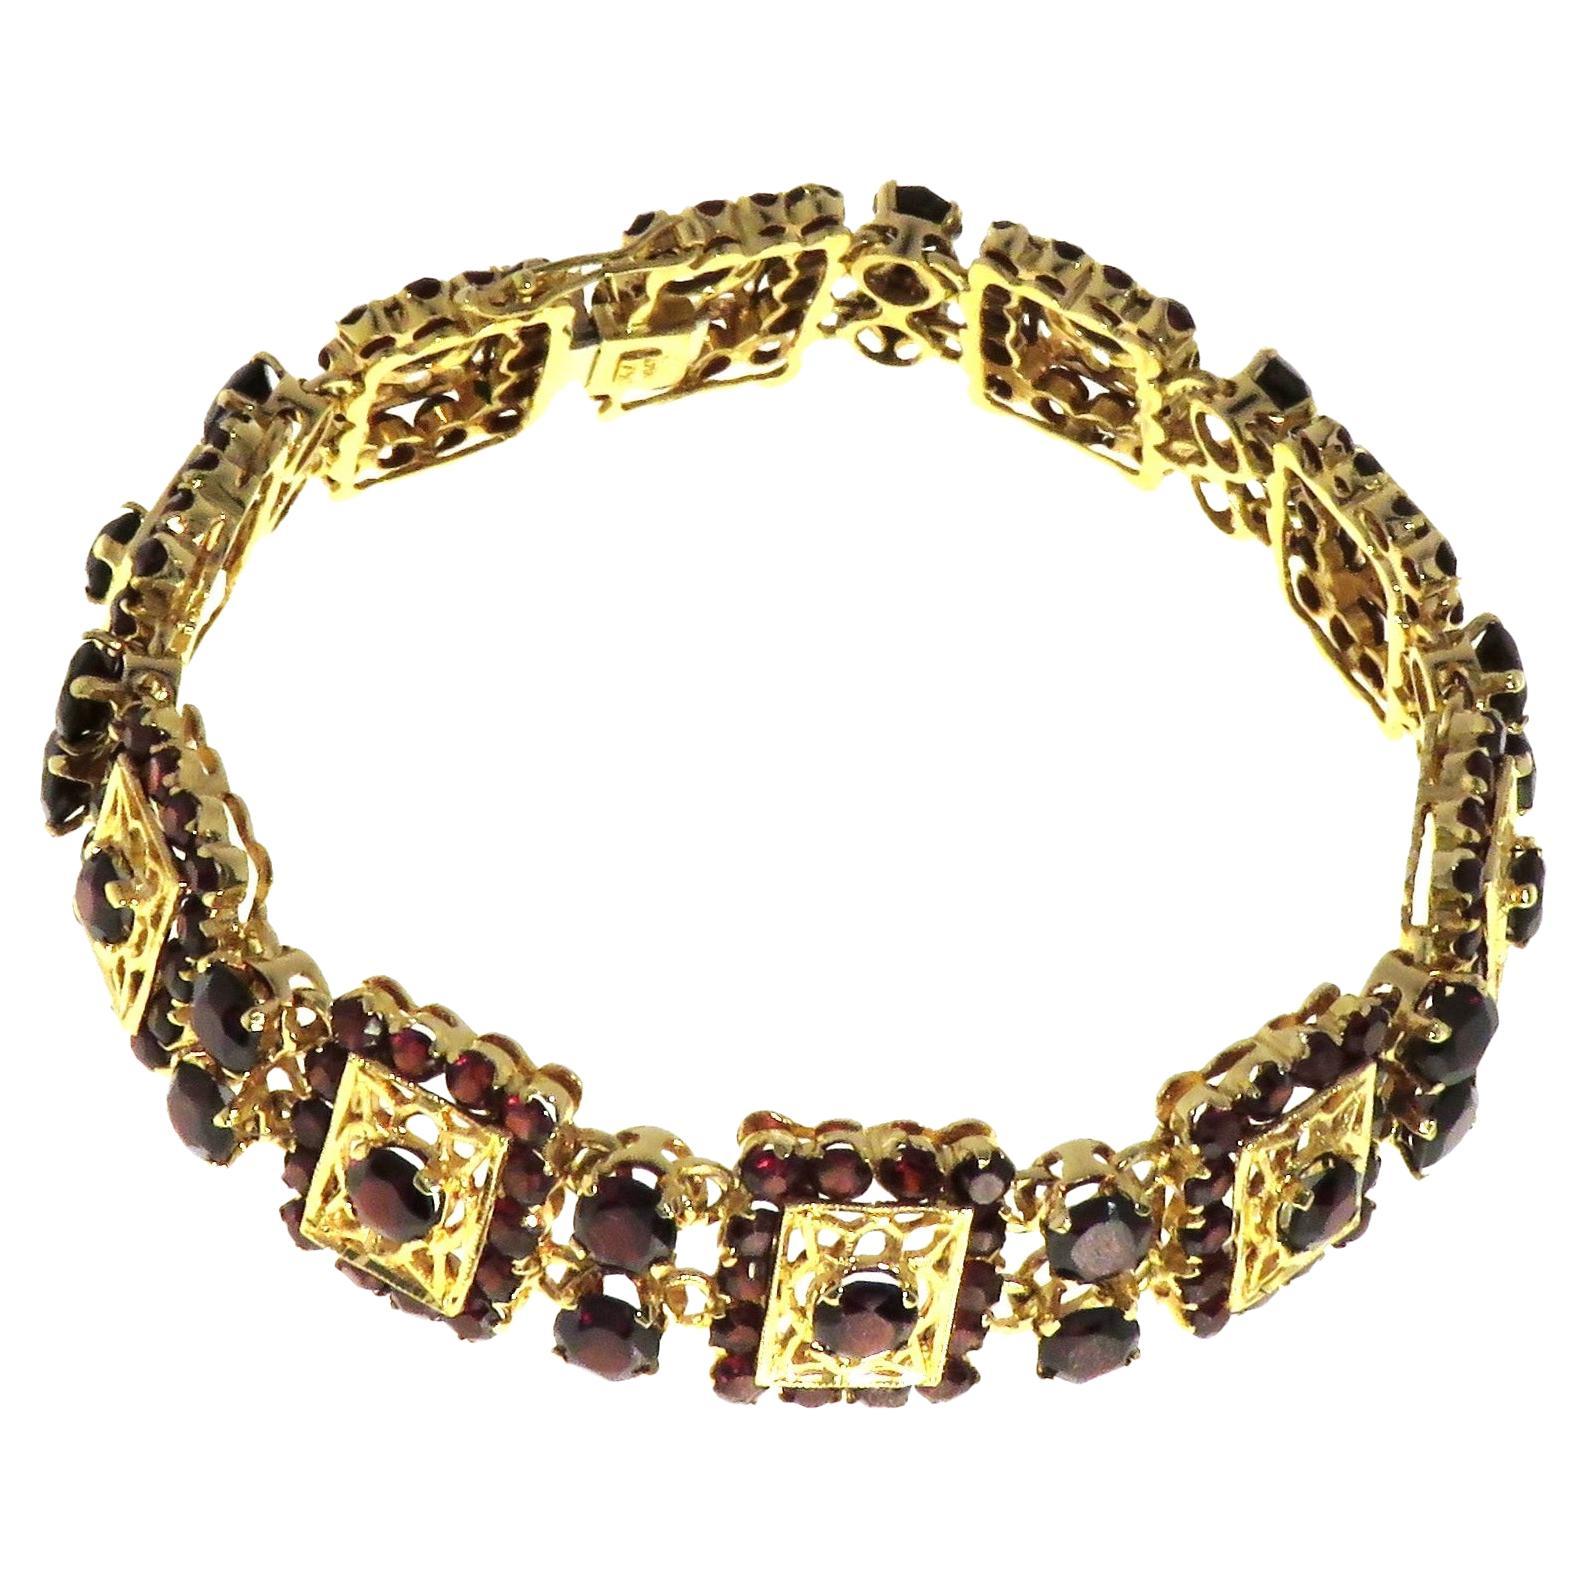 Garnet 14k yellow gold tennis bracelet VINTAGE | eBay